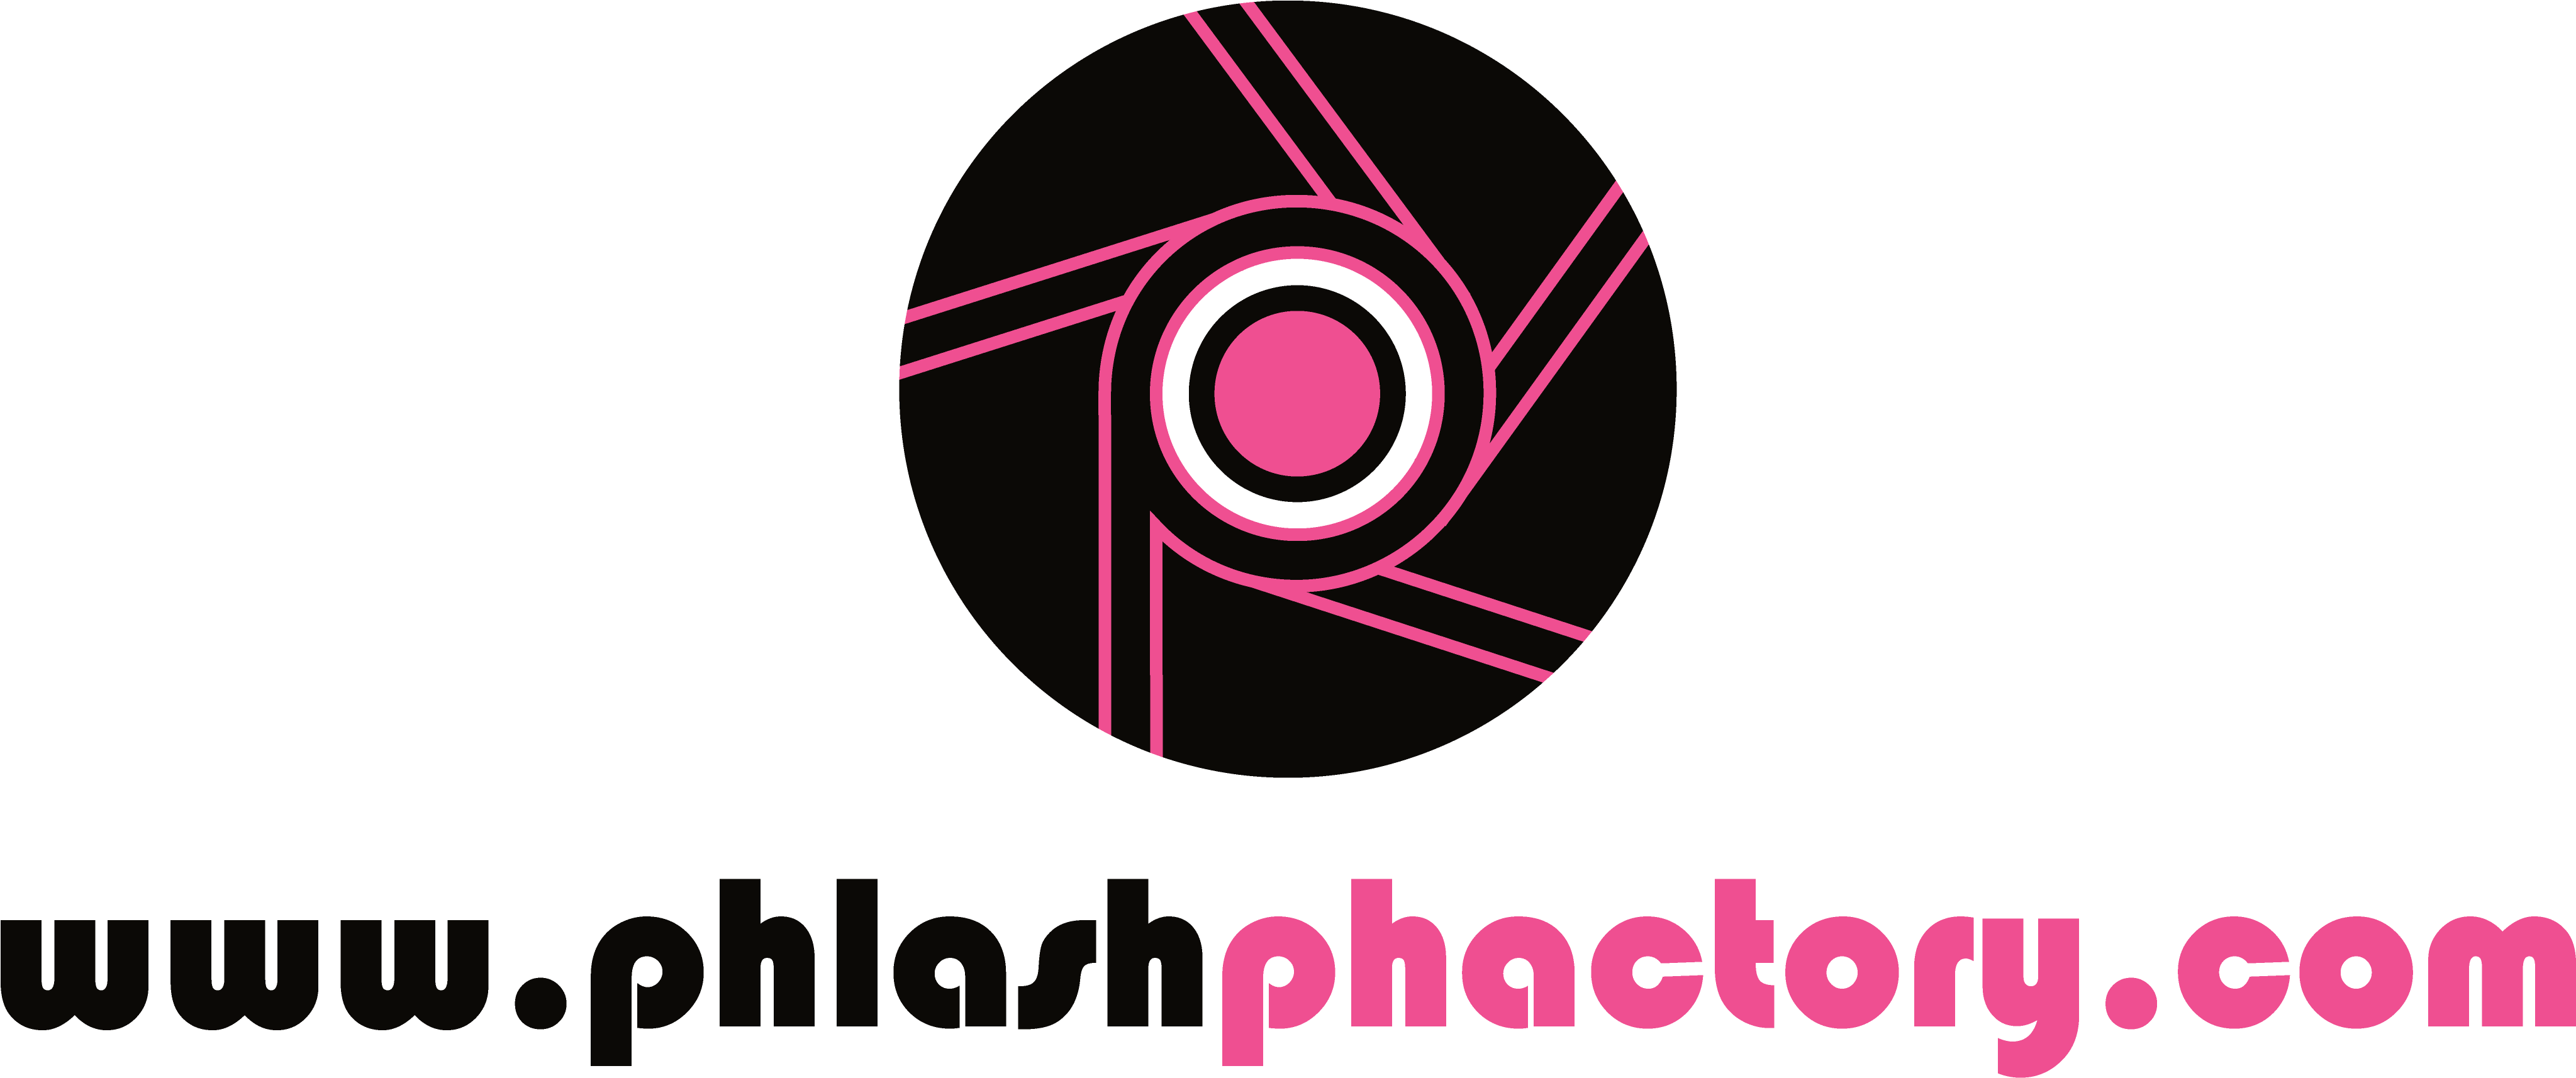 Phlash Phactory - Houston Digital Photo Booth (4342x1921)